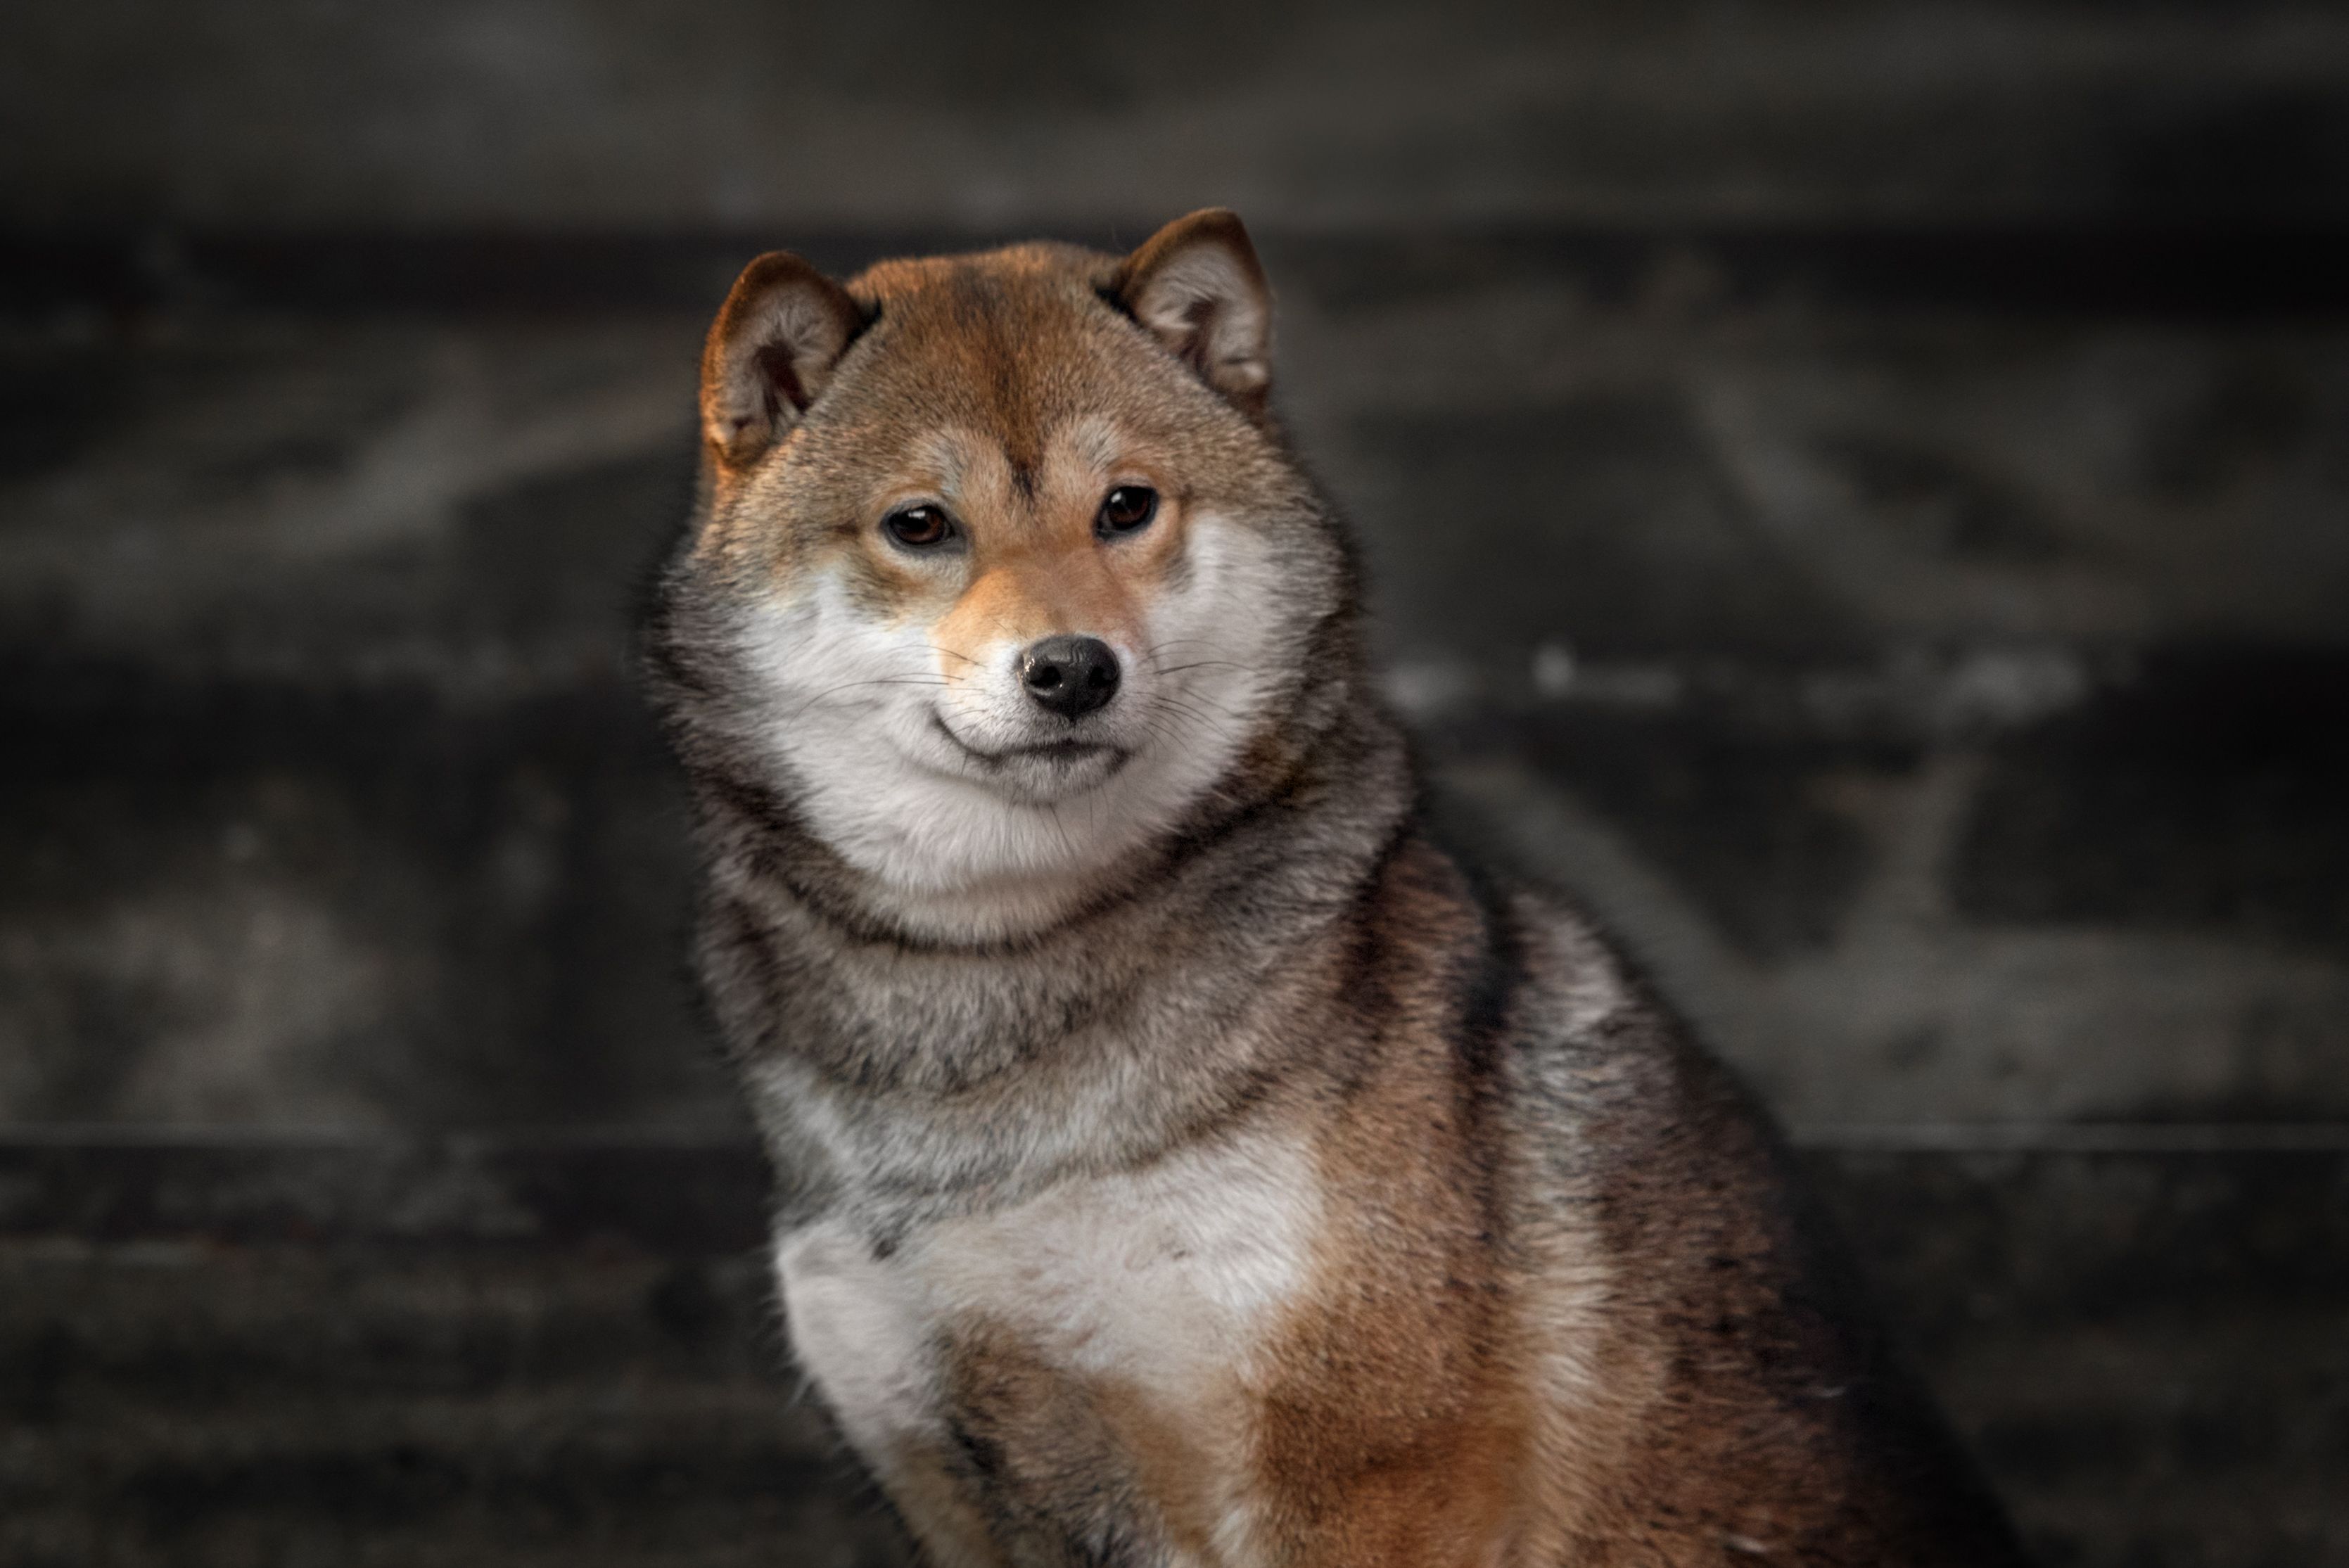 13 Dogs that Look Like Foxes Shiba Inu, Akita Inu, Pembroke Welsh Corgi, and More